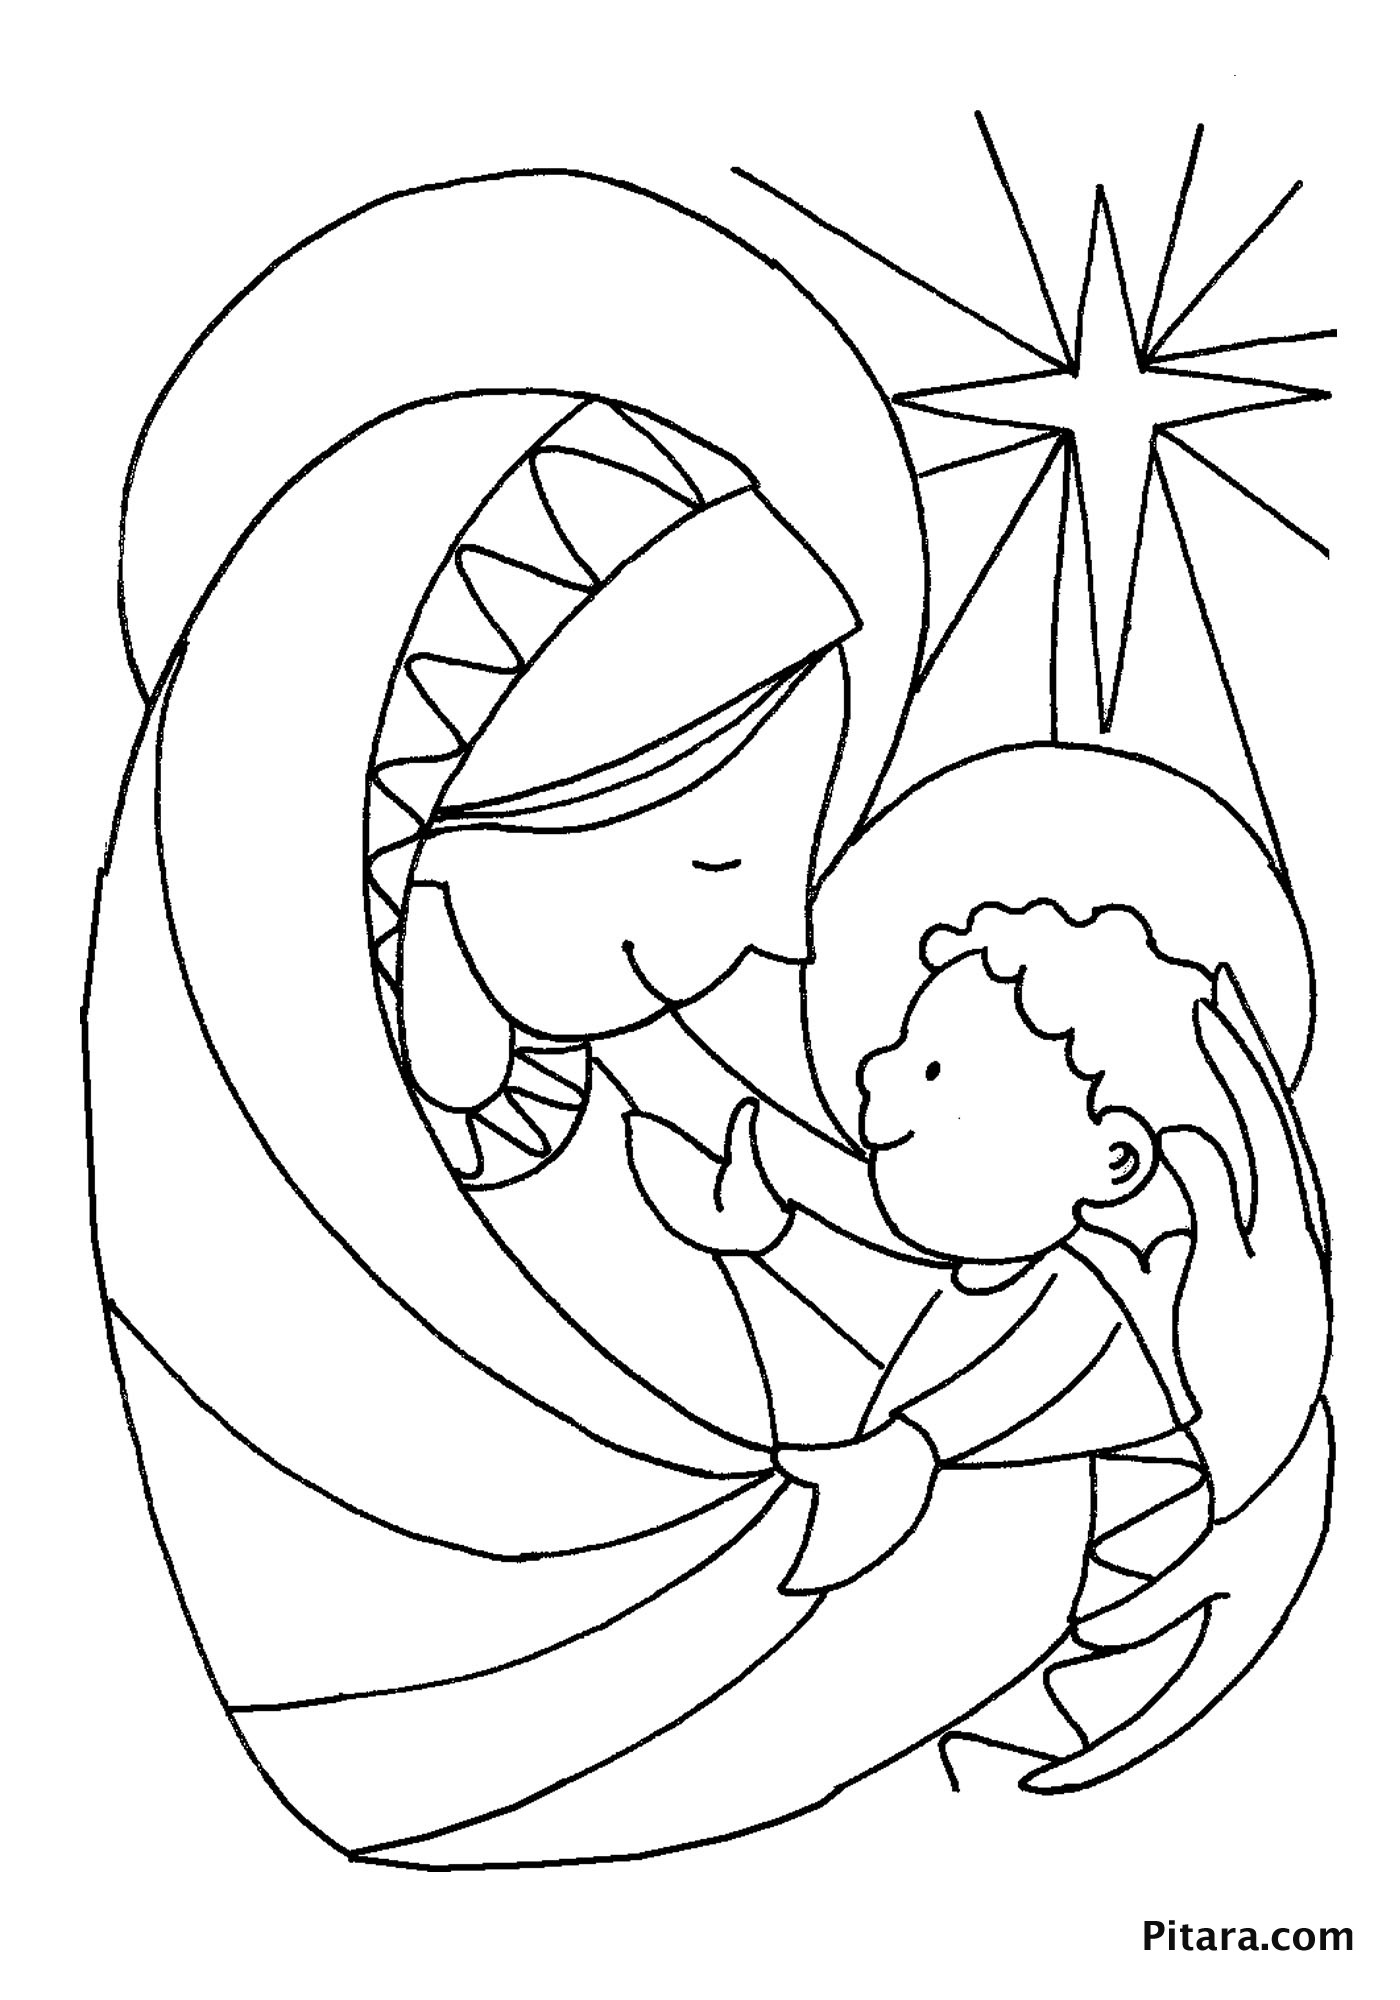 Mary & baby Jesus – Coloring page | Pitara Kids Network